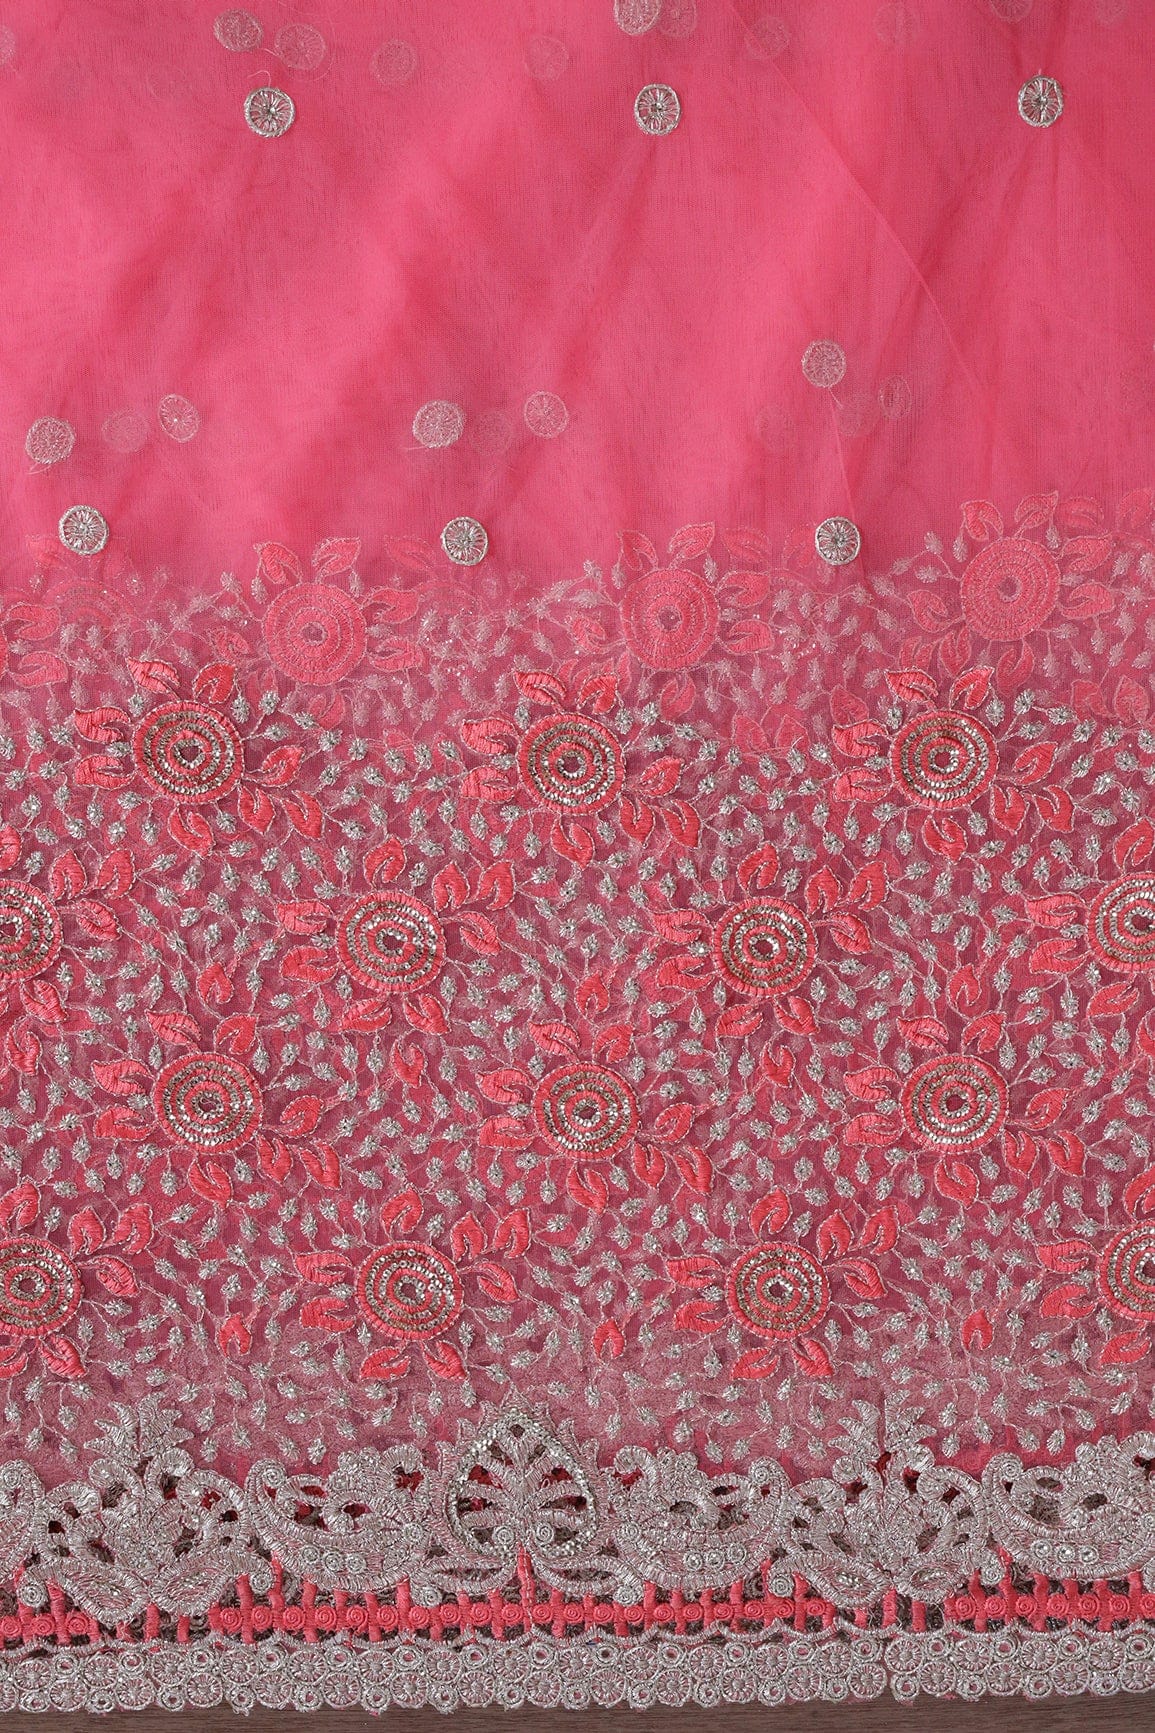 doeraa Embroidery Fabrics Big Width''56'' Gajri Pink Thread With Zari Floral Embroidery Work On Gajri Pink Soft Net Fabric With Border